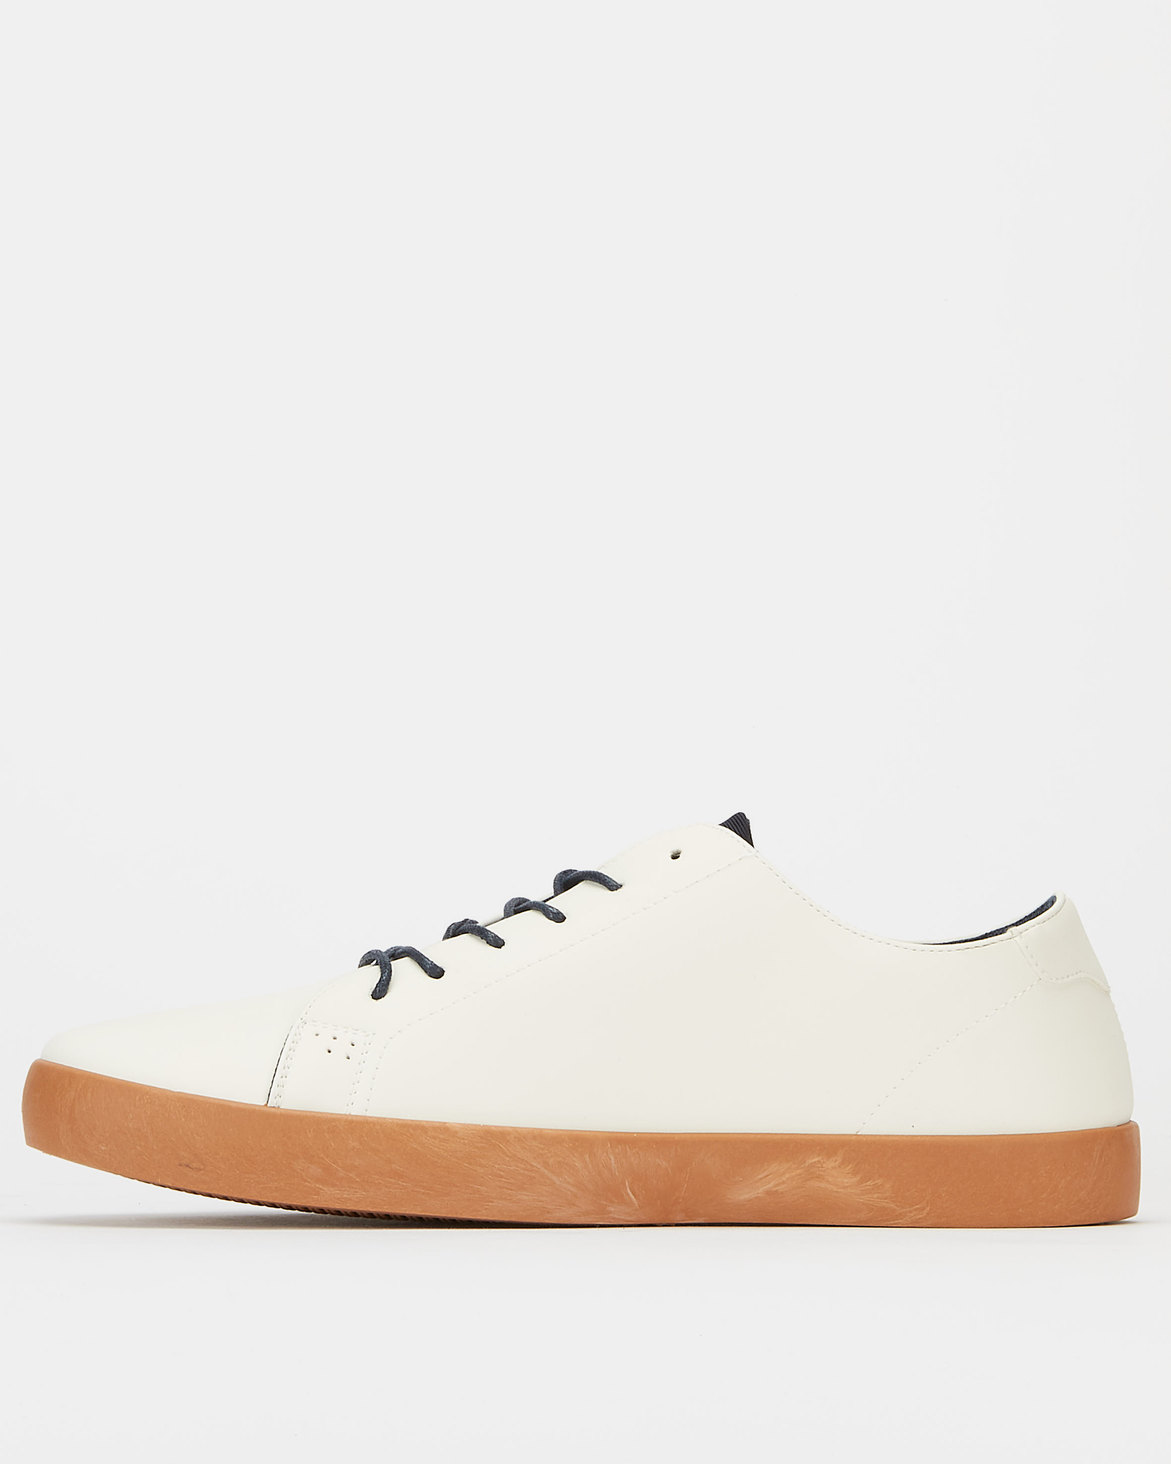 Pierre Cardin Sneakers White/Navy | Zando